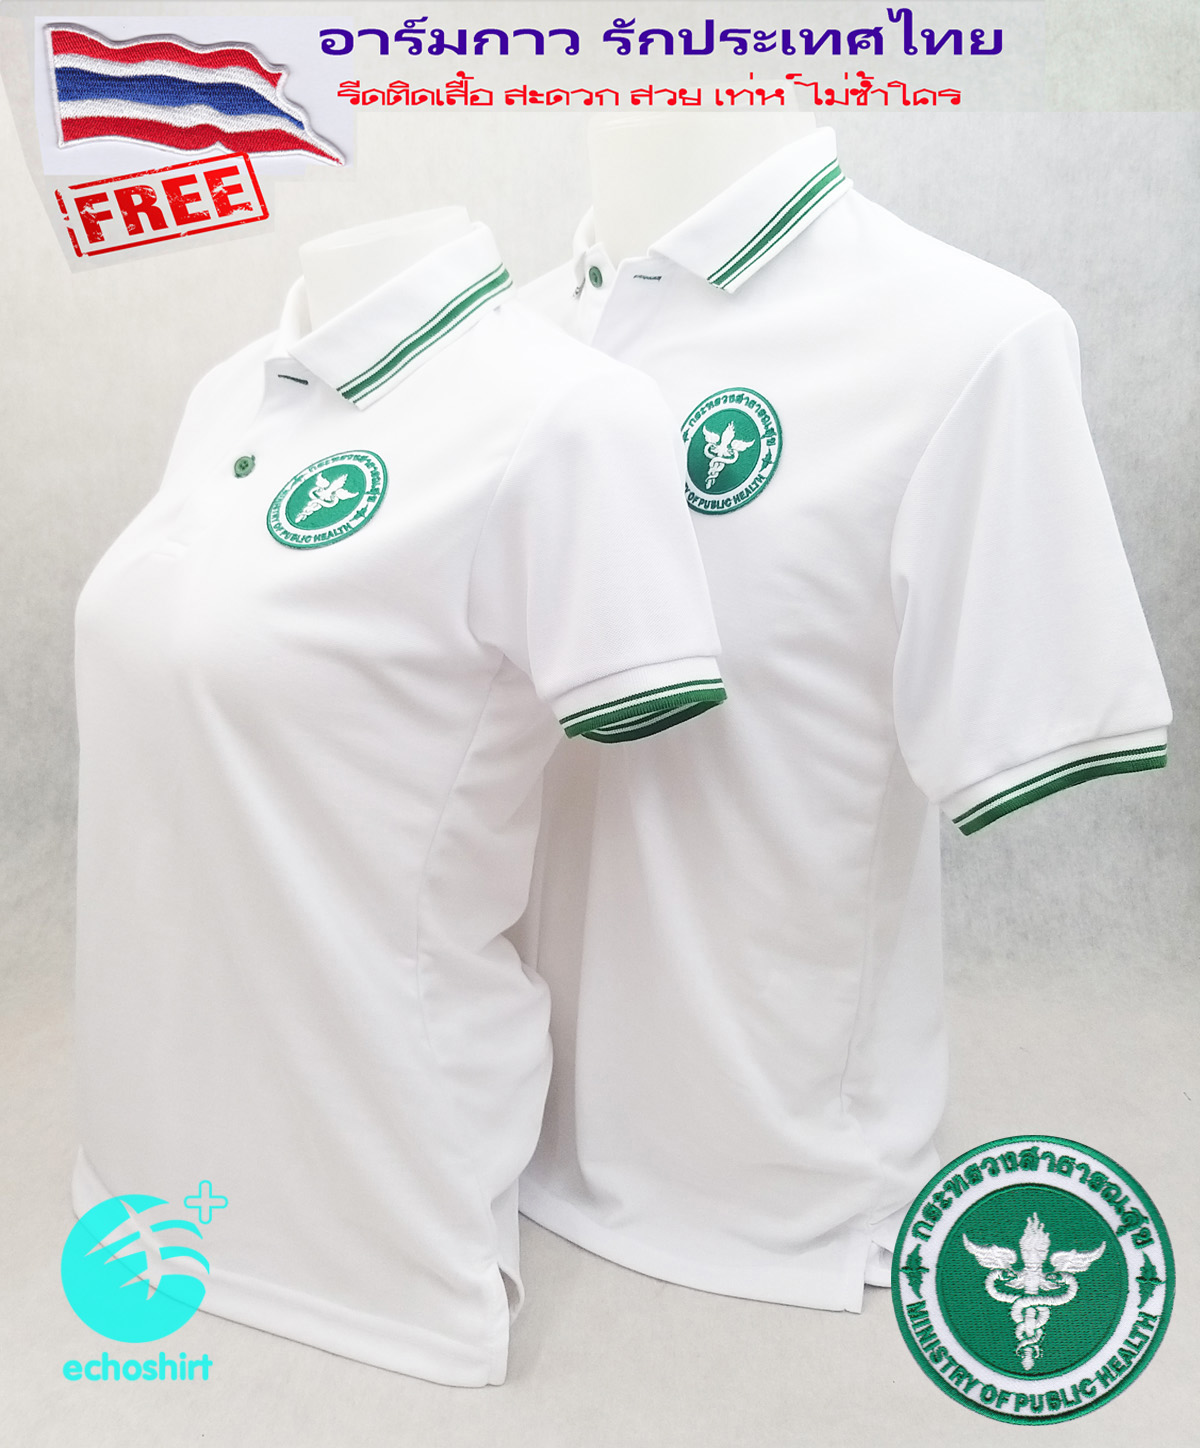 ?New Seriesขาว-เขียว!! เสื้อโปโล กระทรวงสาธารณสุข (สธ.) By Echoplus ผ้าเกรดดี นุ่มลื่นใส่สบาย  แถมอาร์มรีดธงไทย